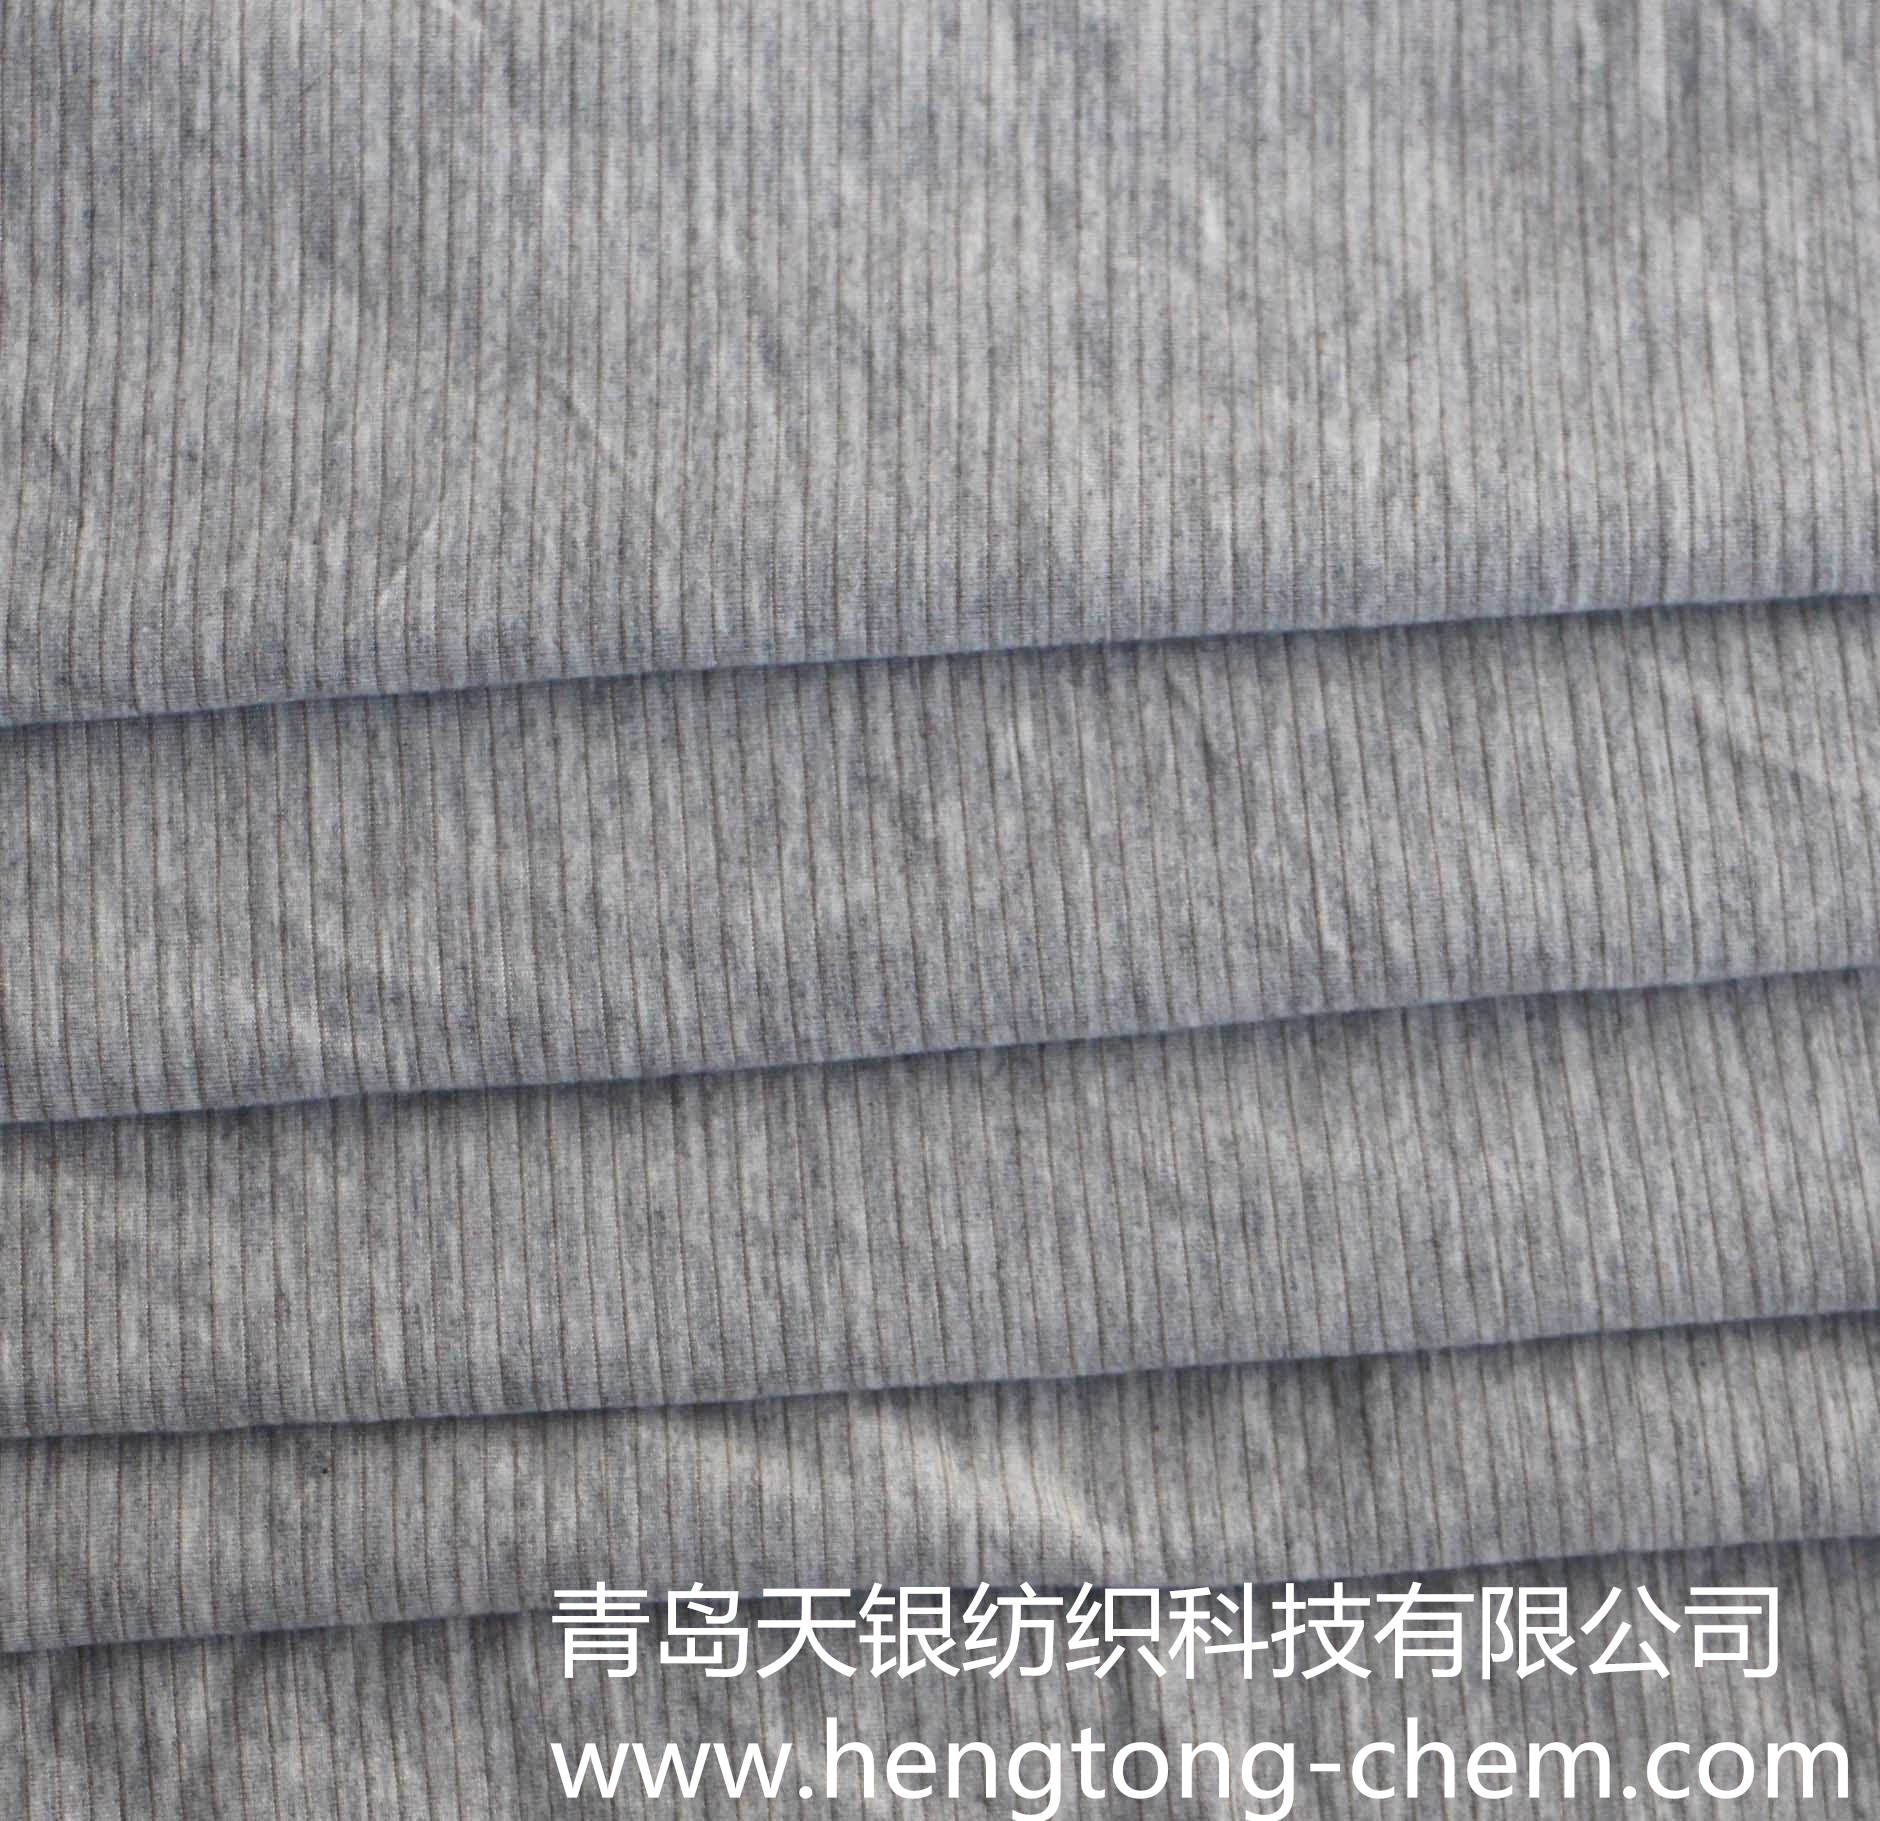 Silver fiber antibacterial underwear fabric - light gray